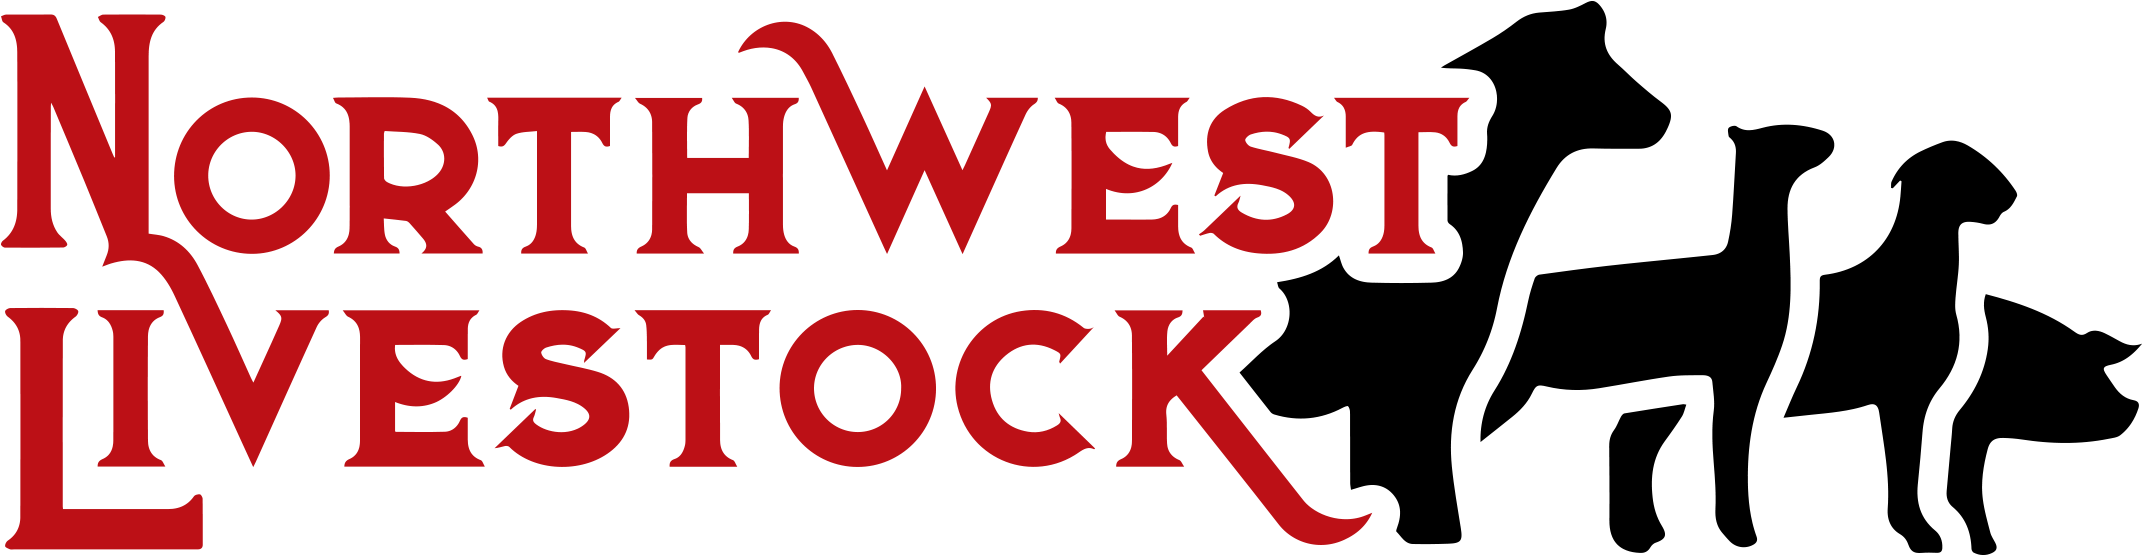 Northwest Livestock - Poster (2198x600)